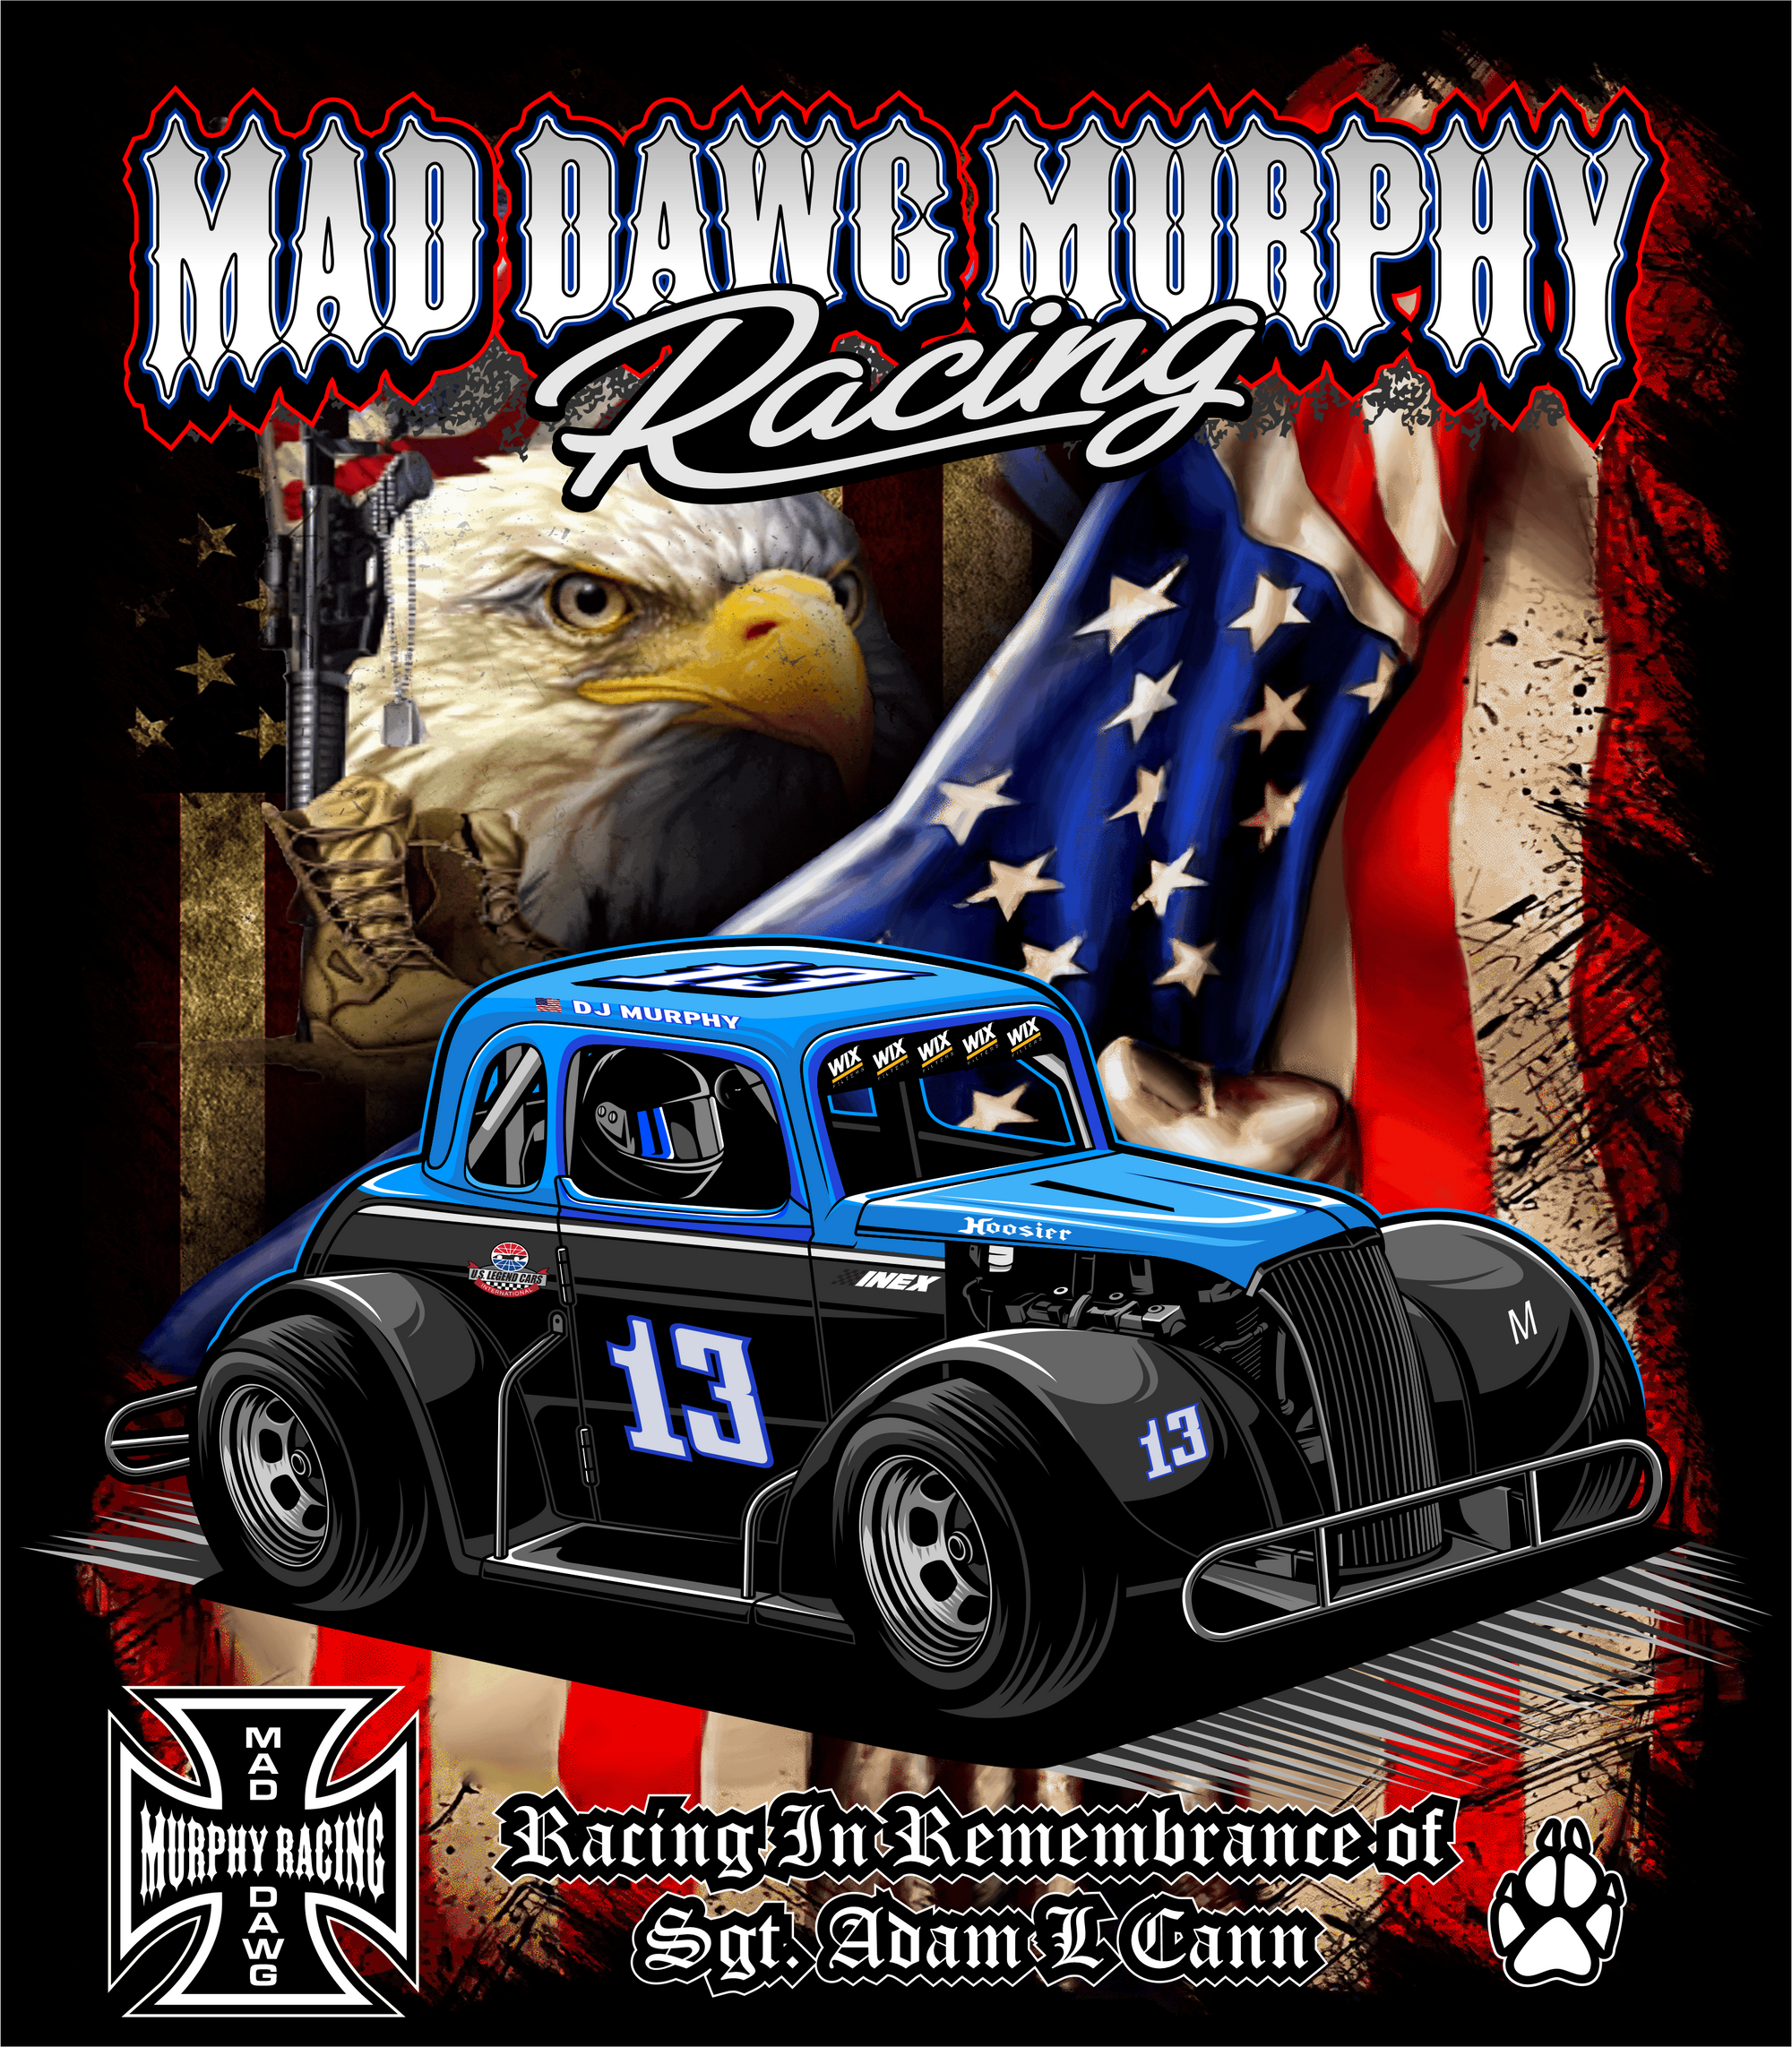 Mad Dawg Murphy Racing